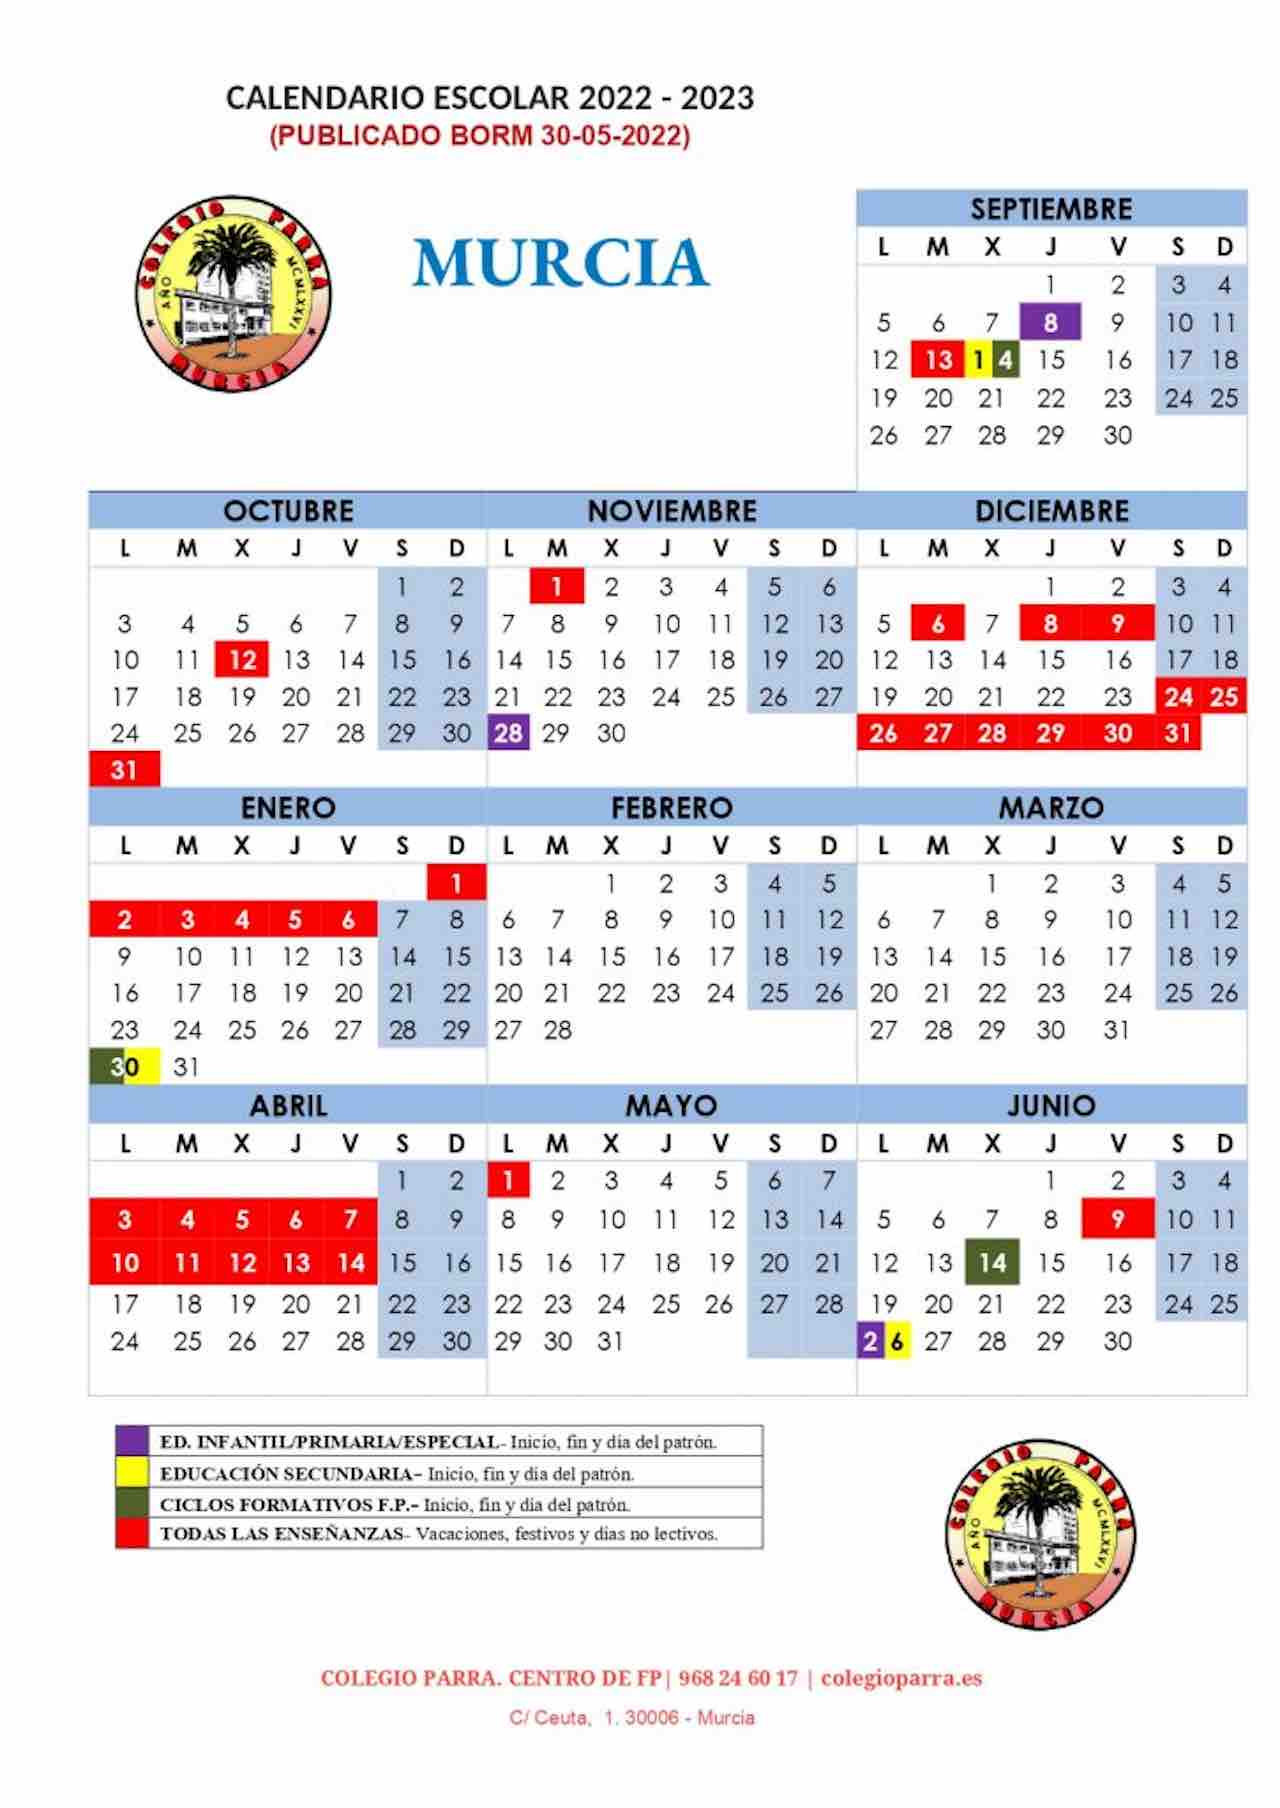 Calendario escolar MURCIA para el curso 2022-2023